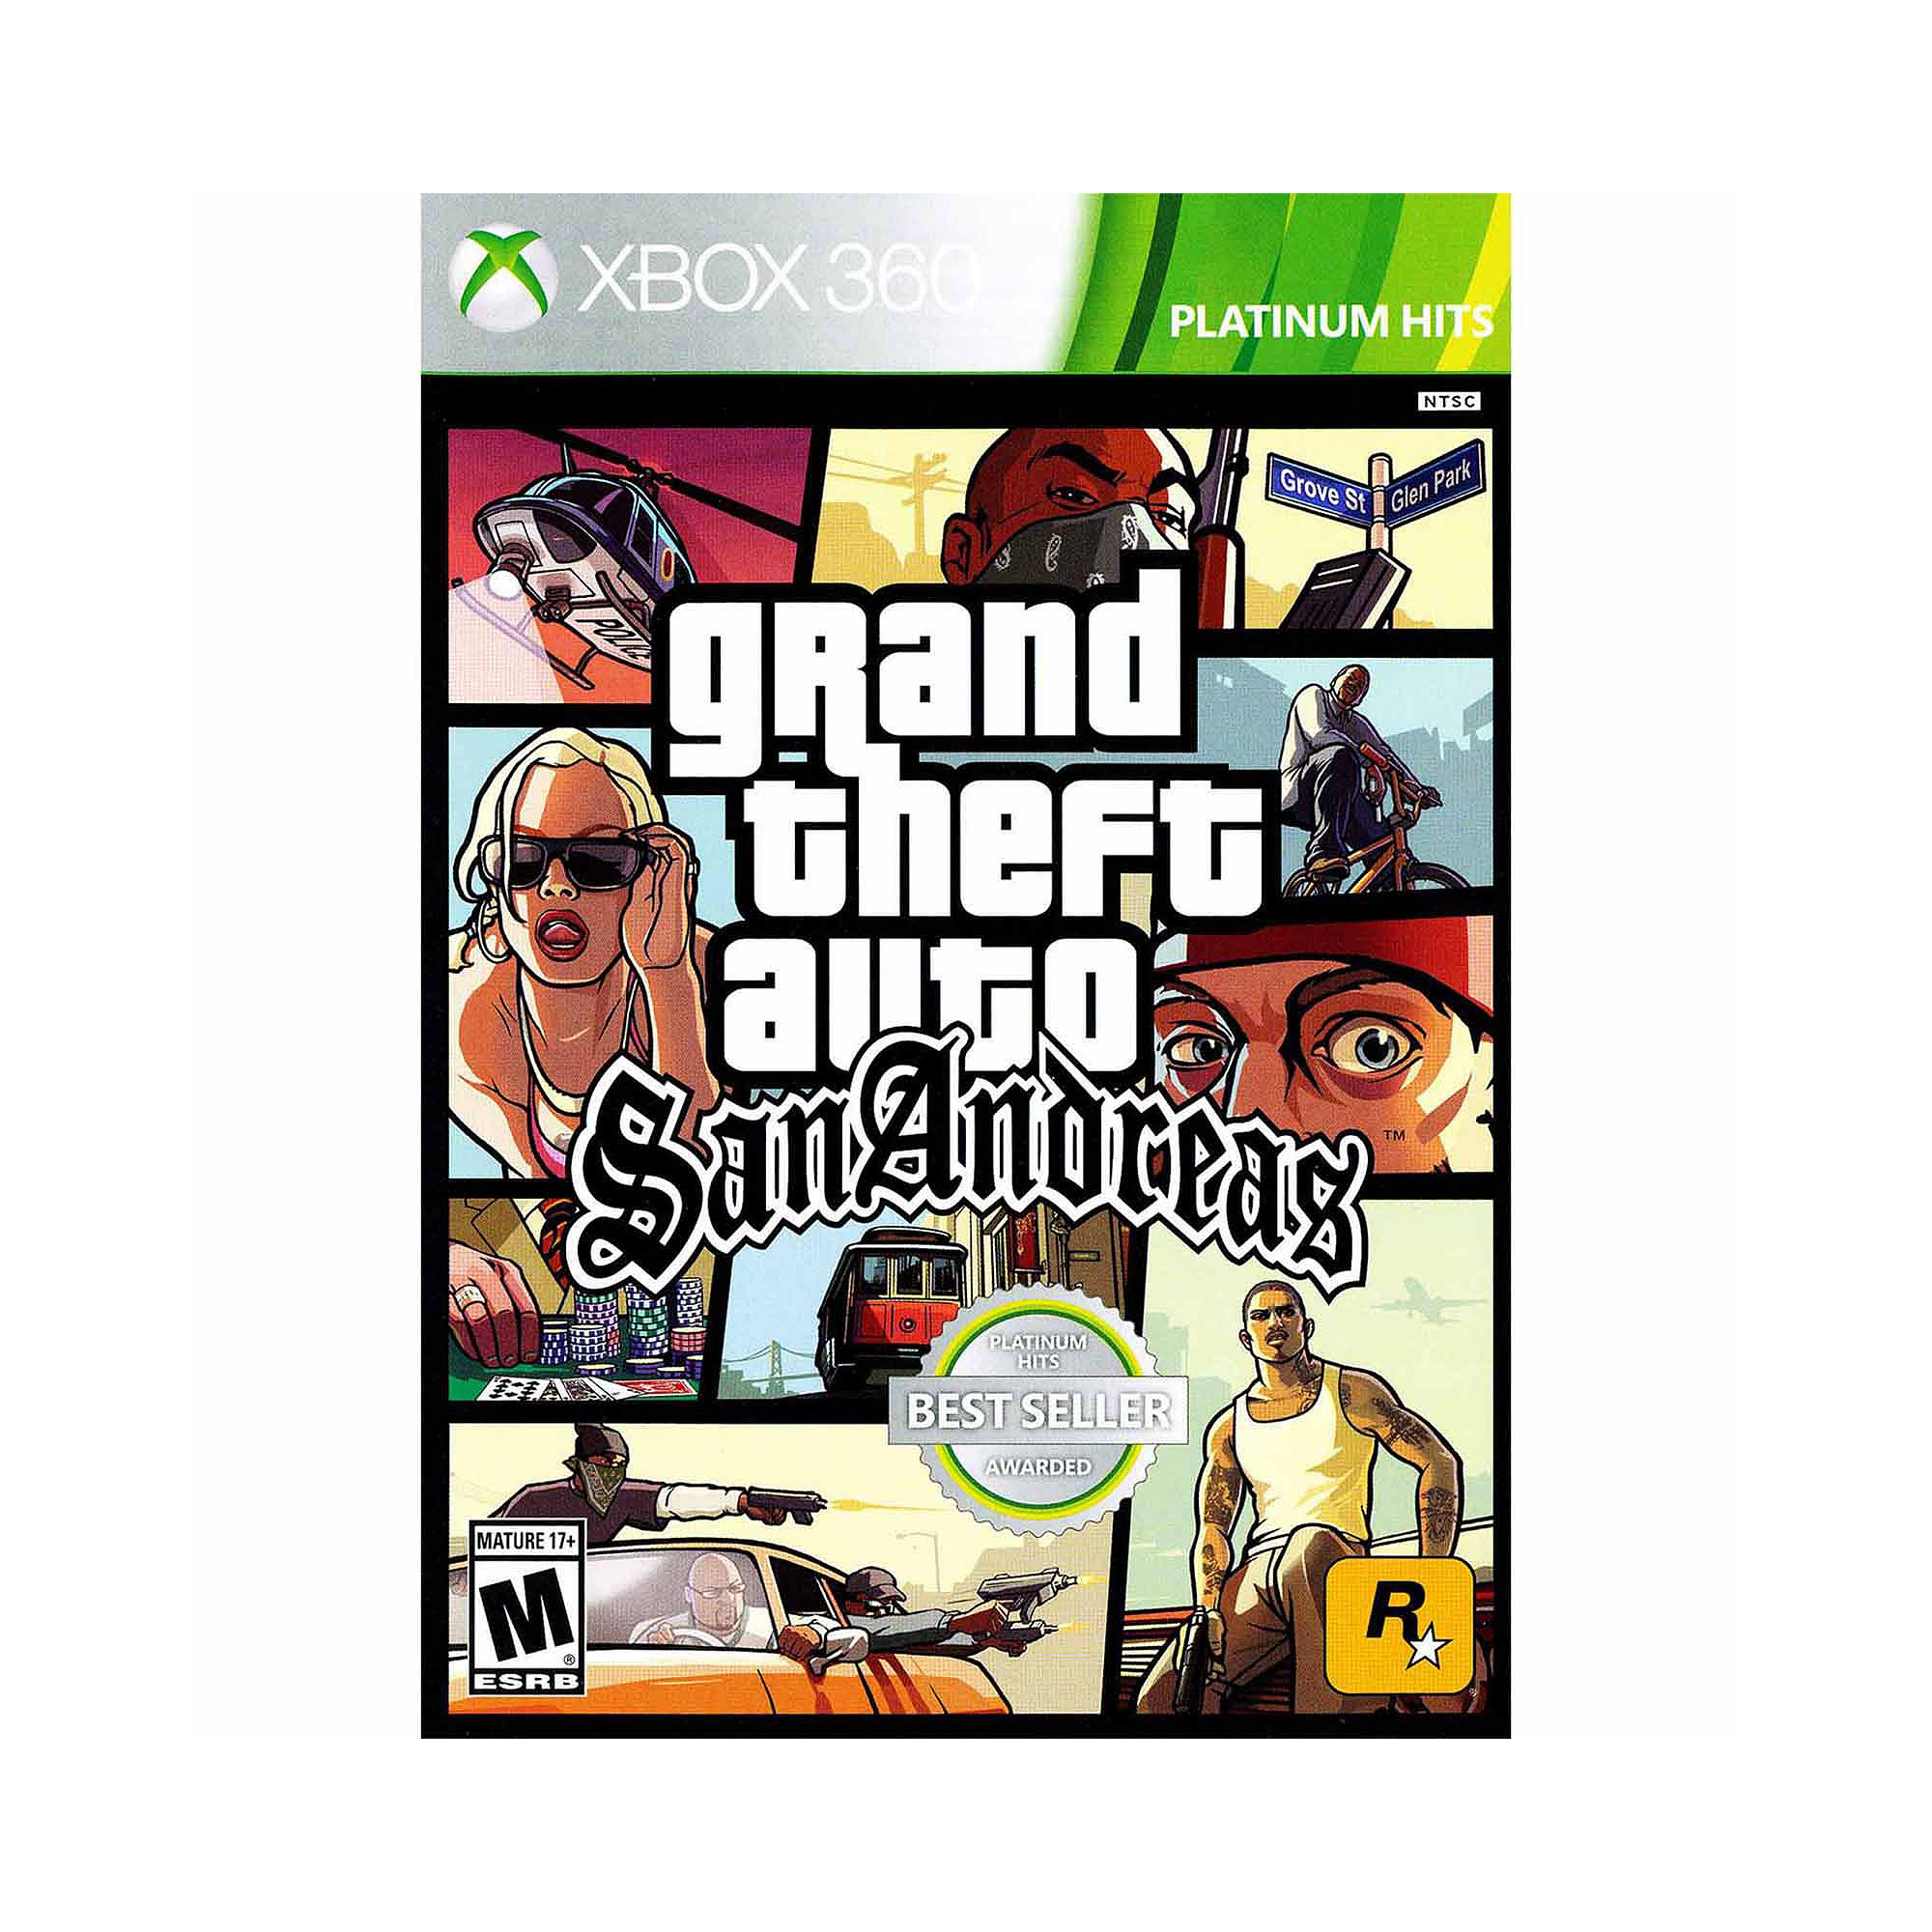 Grand Theft Auto: San Andreas, Rockstar Games, Xbox 360, 710425495649 - image 4 of 4